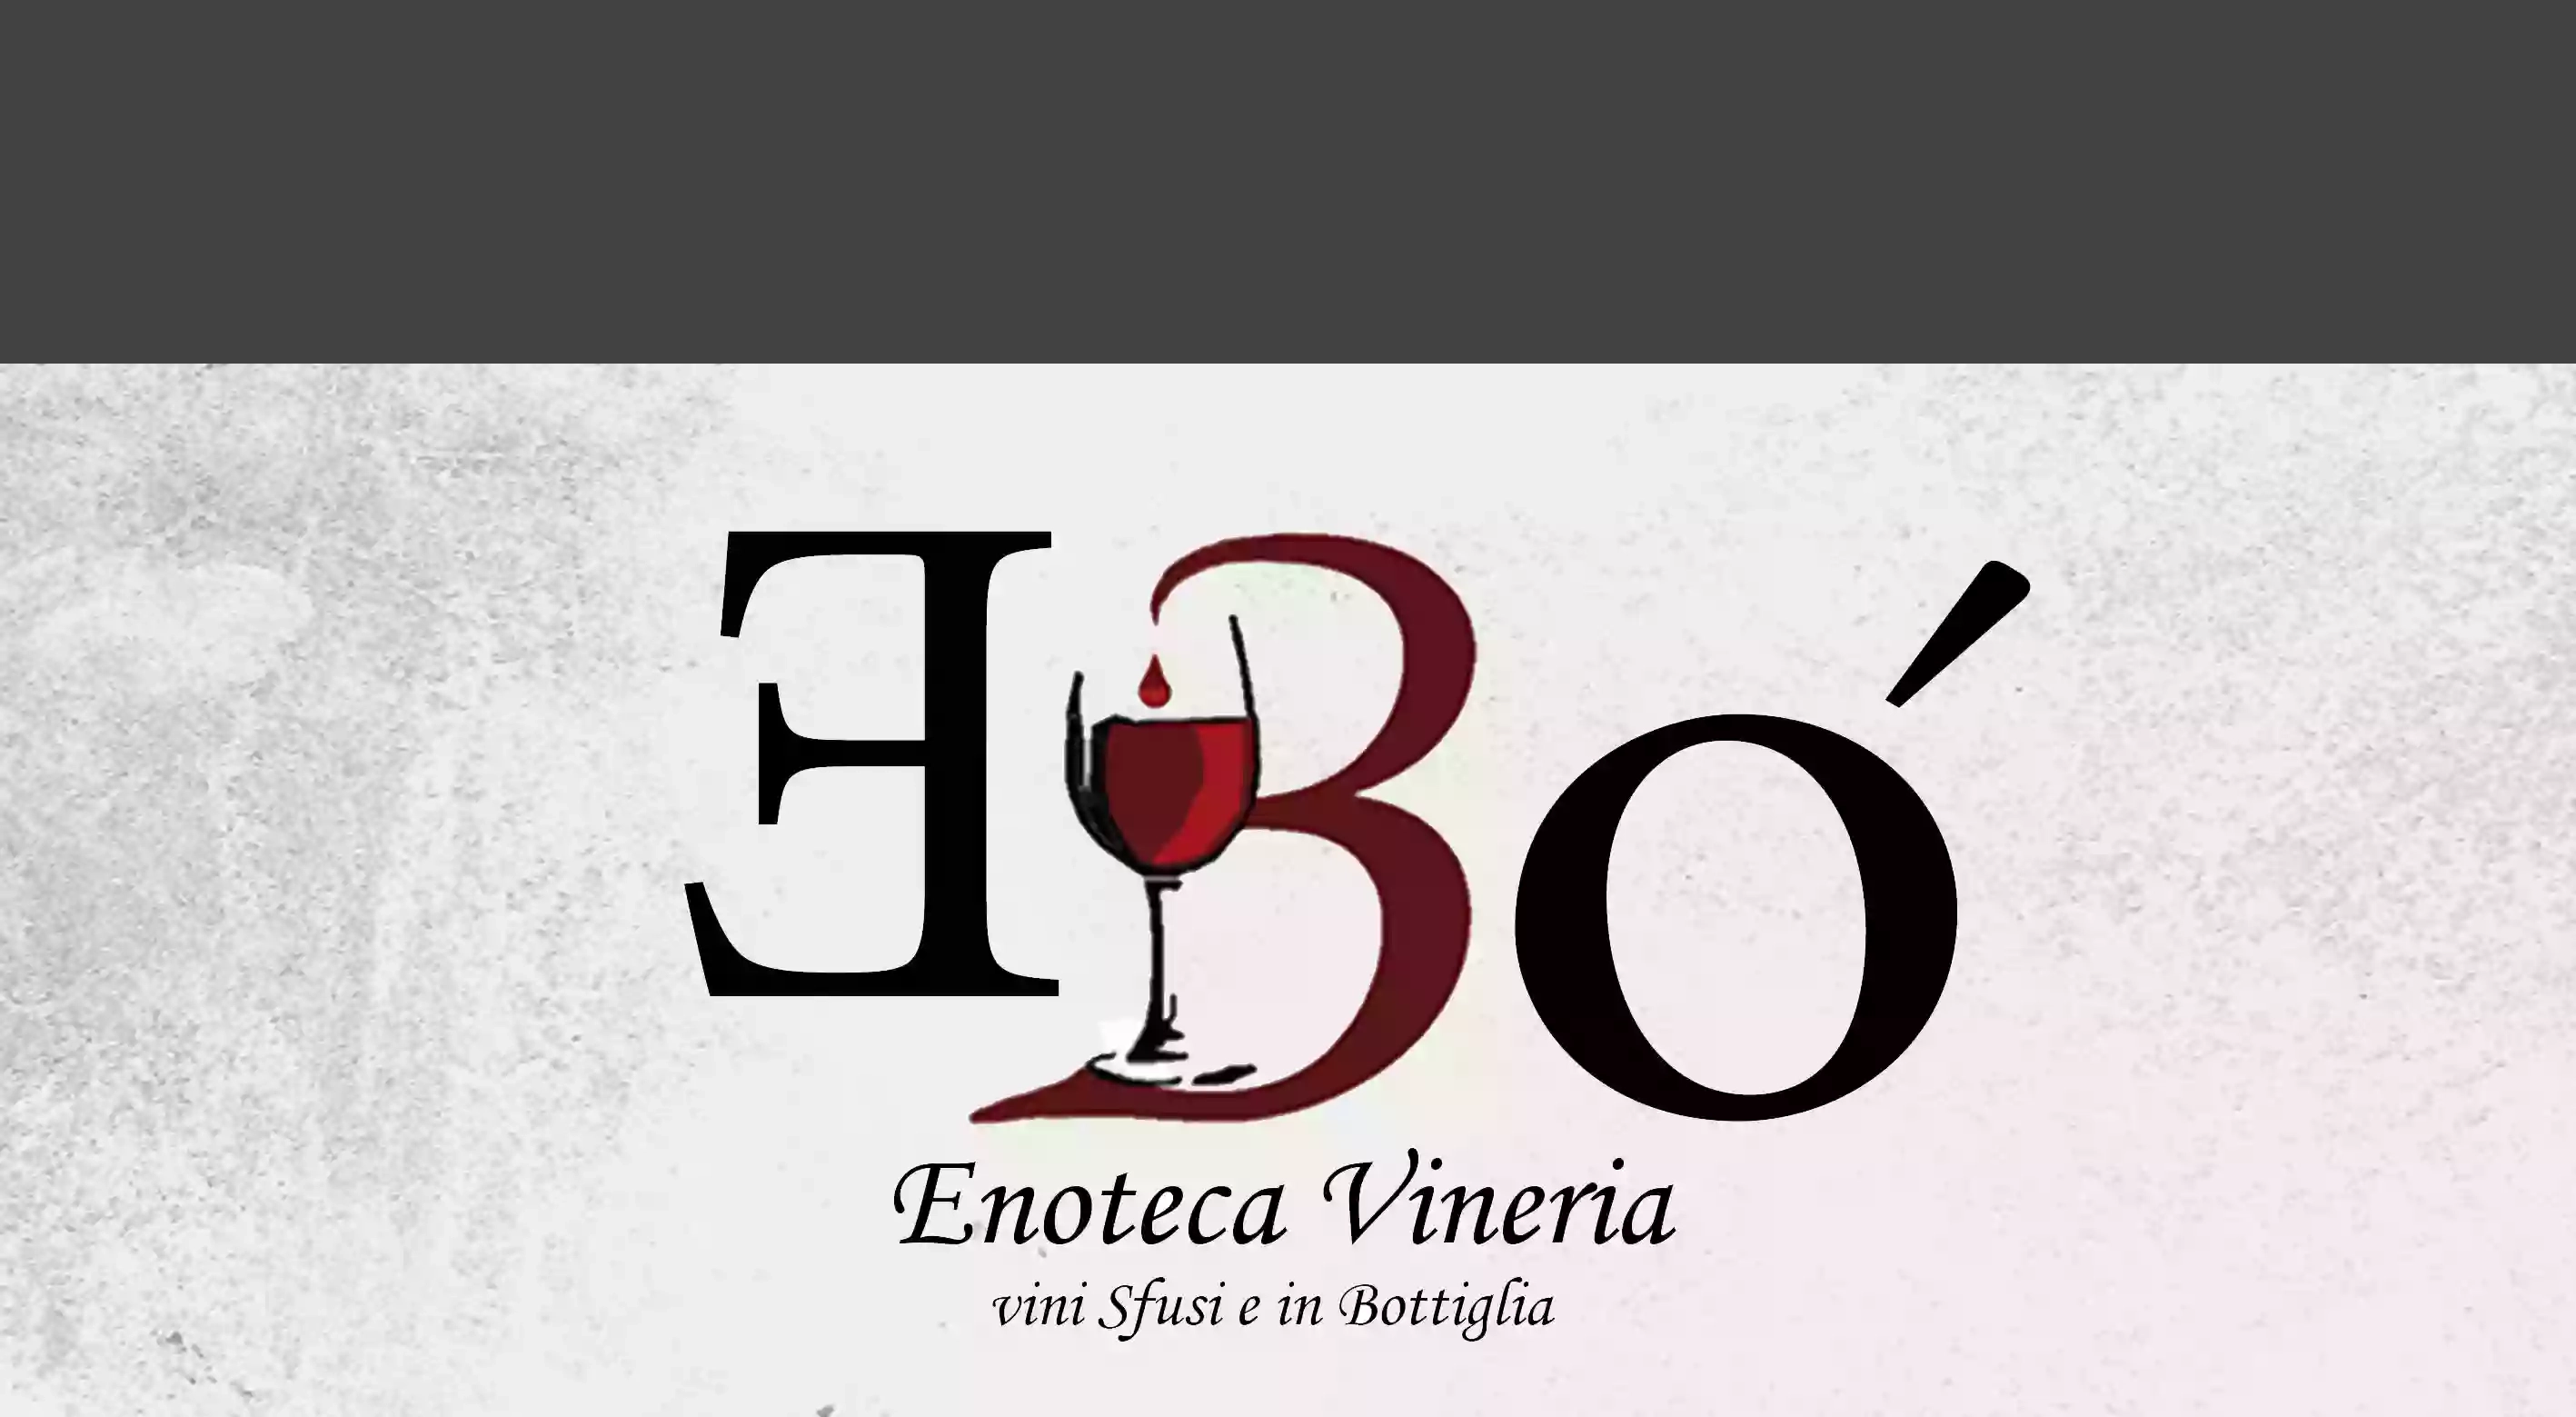 Ebo' Enoteca Vineria